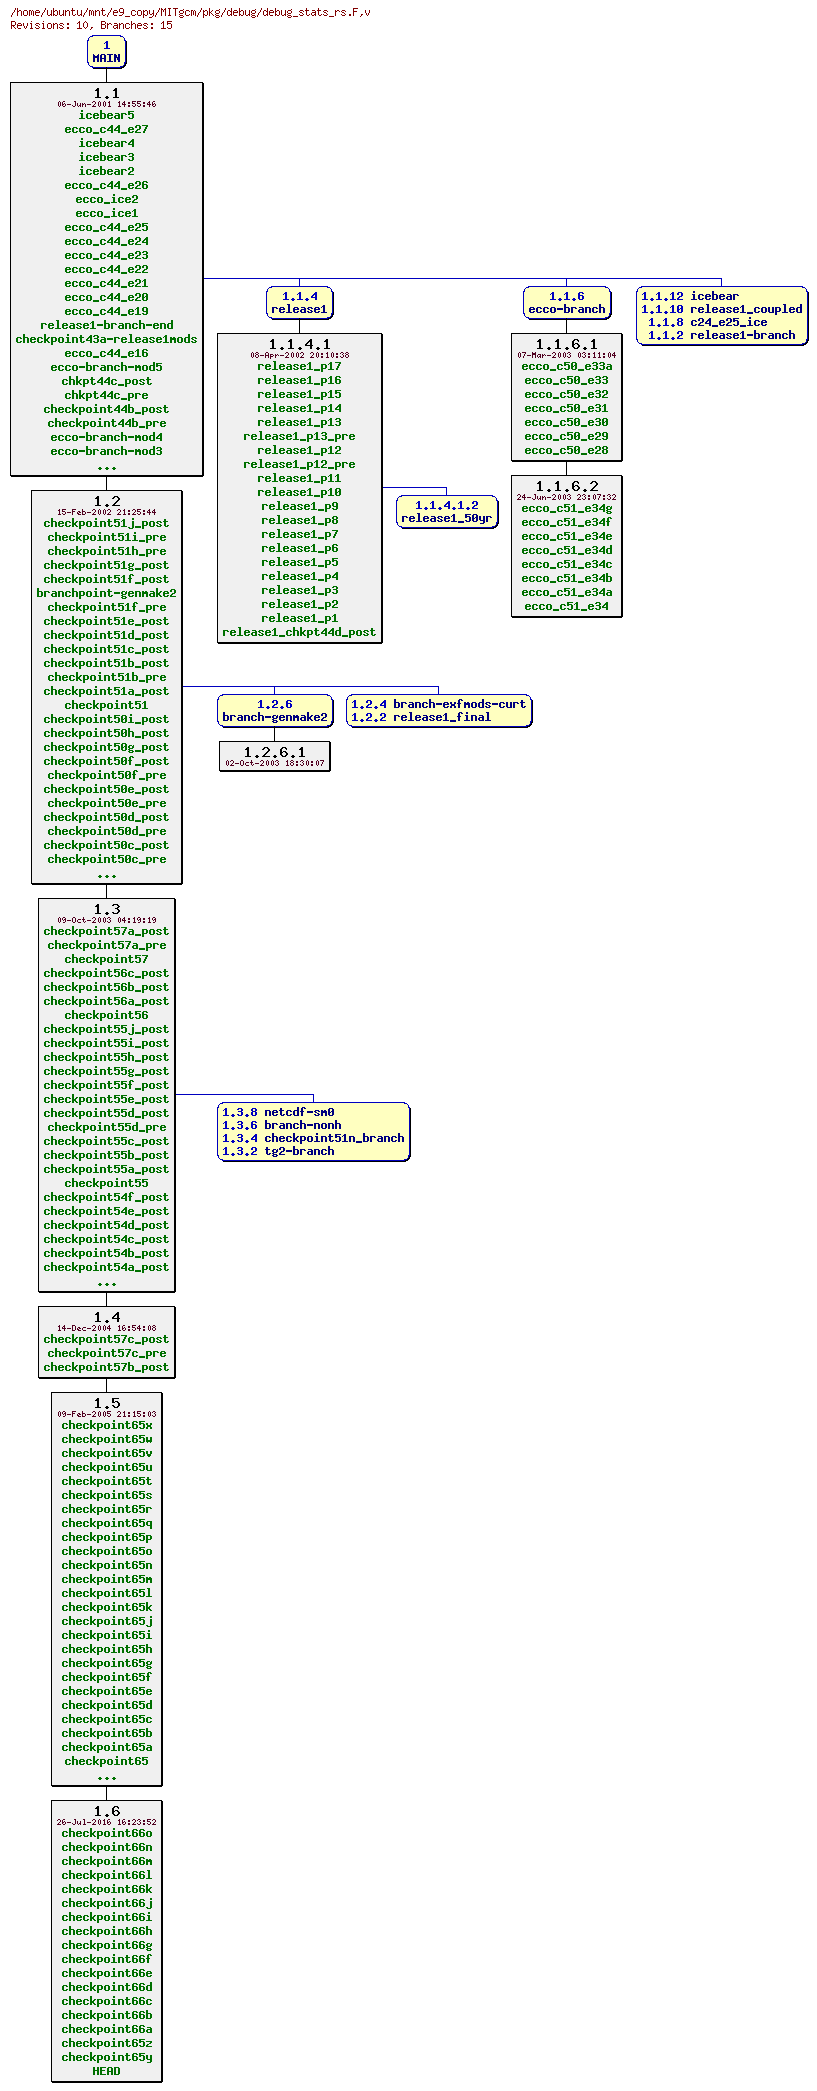 Revisions of MITgcm/pkg/debug/debug_stats_rs.F